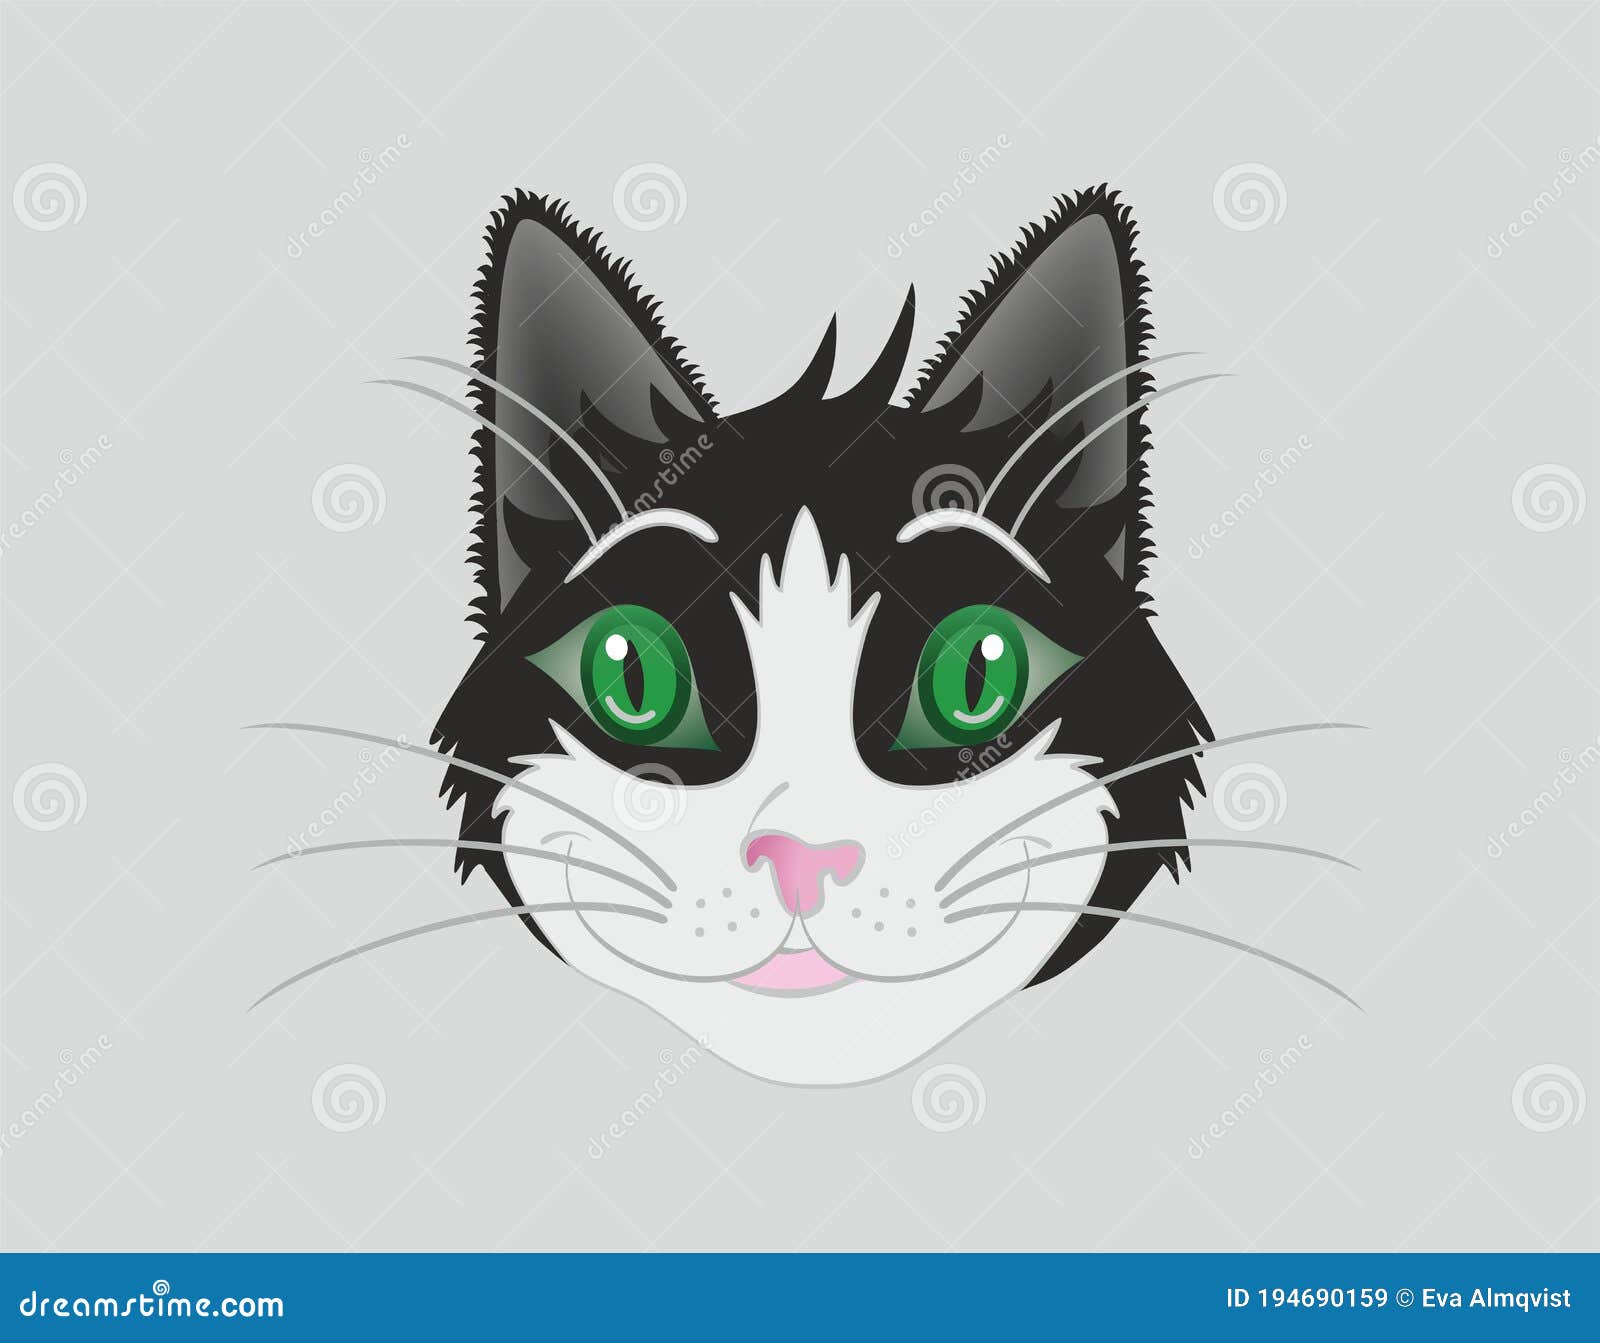 Cute Black and White Cartoon Cat, Vector Illustration